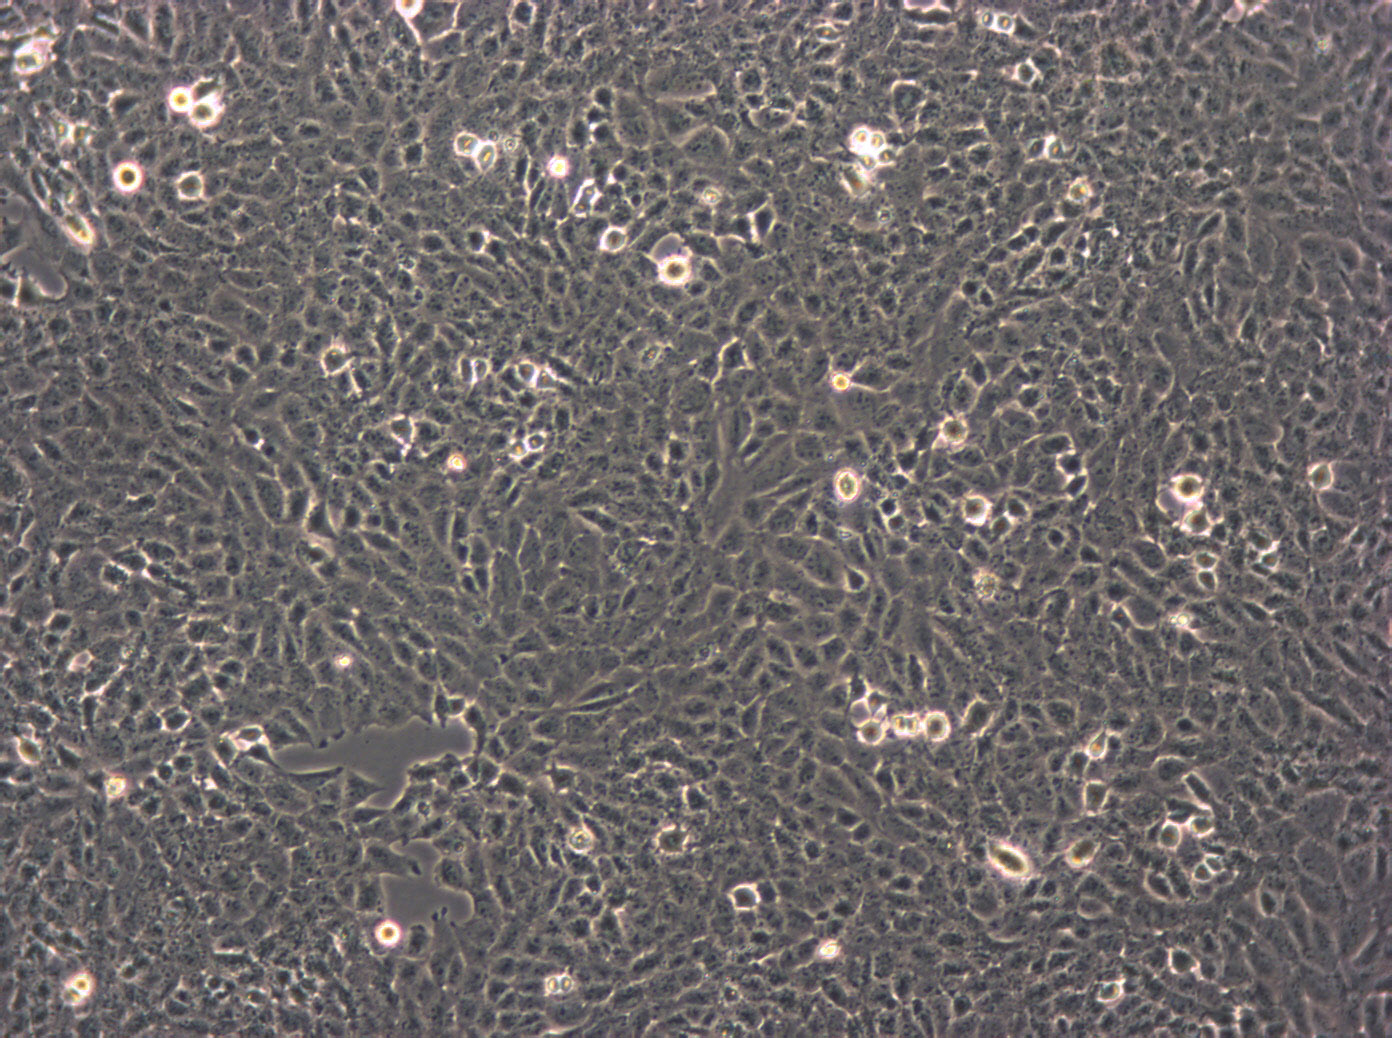 PC-3 Cell|人前列腺癌细胞,PC-3 Cell